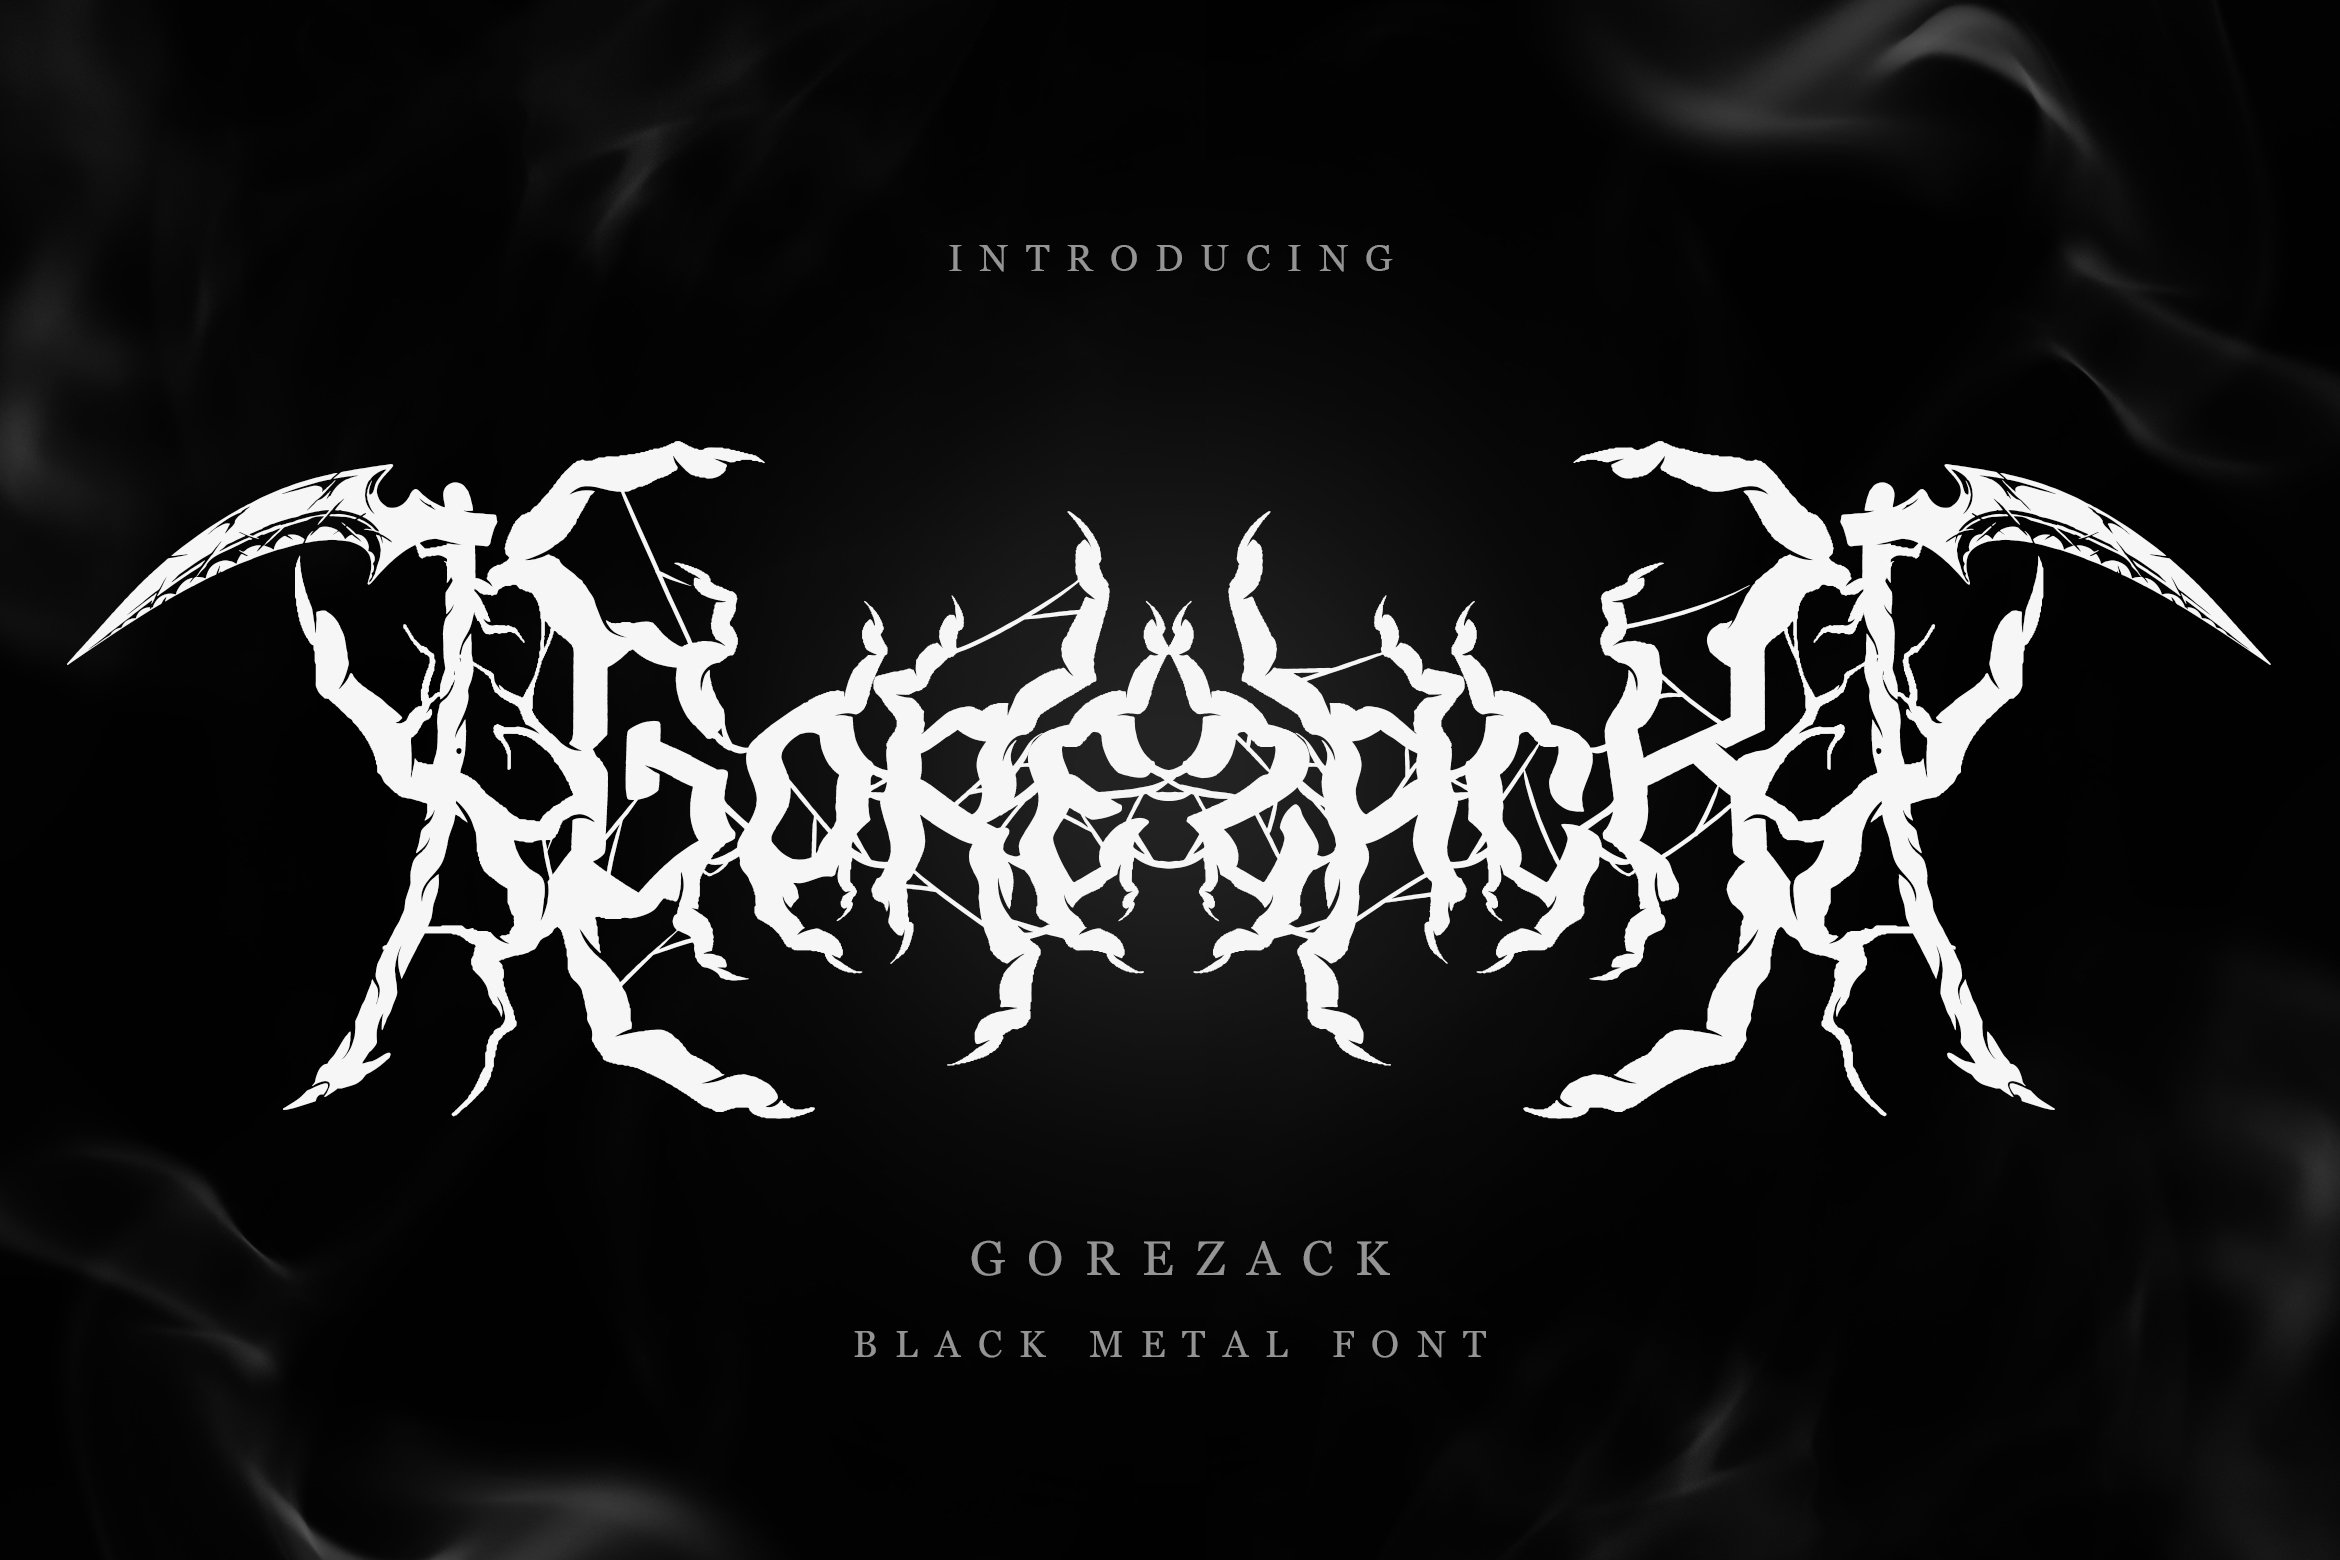 Gorezack | Black Metal Font Vol. 2 cover image.